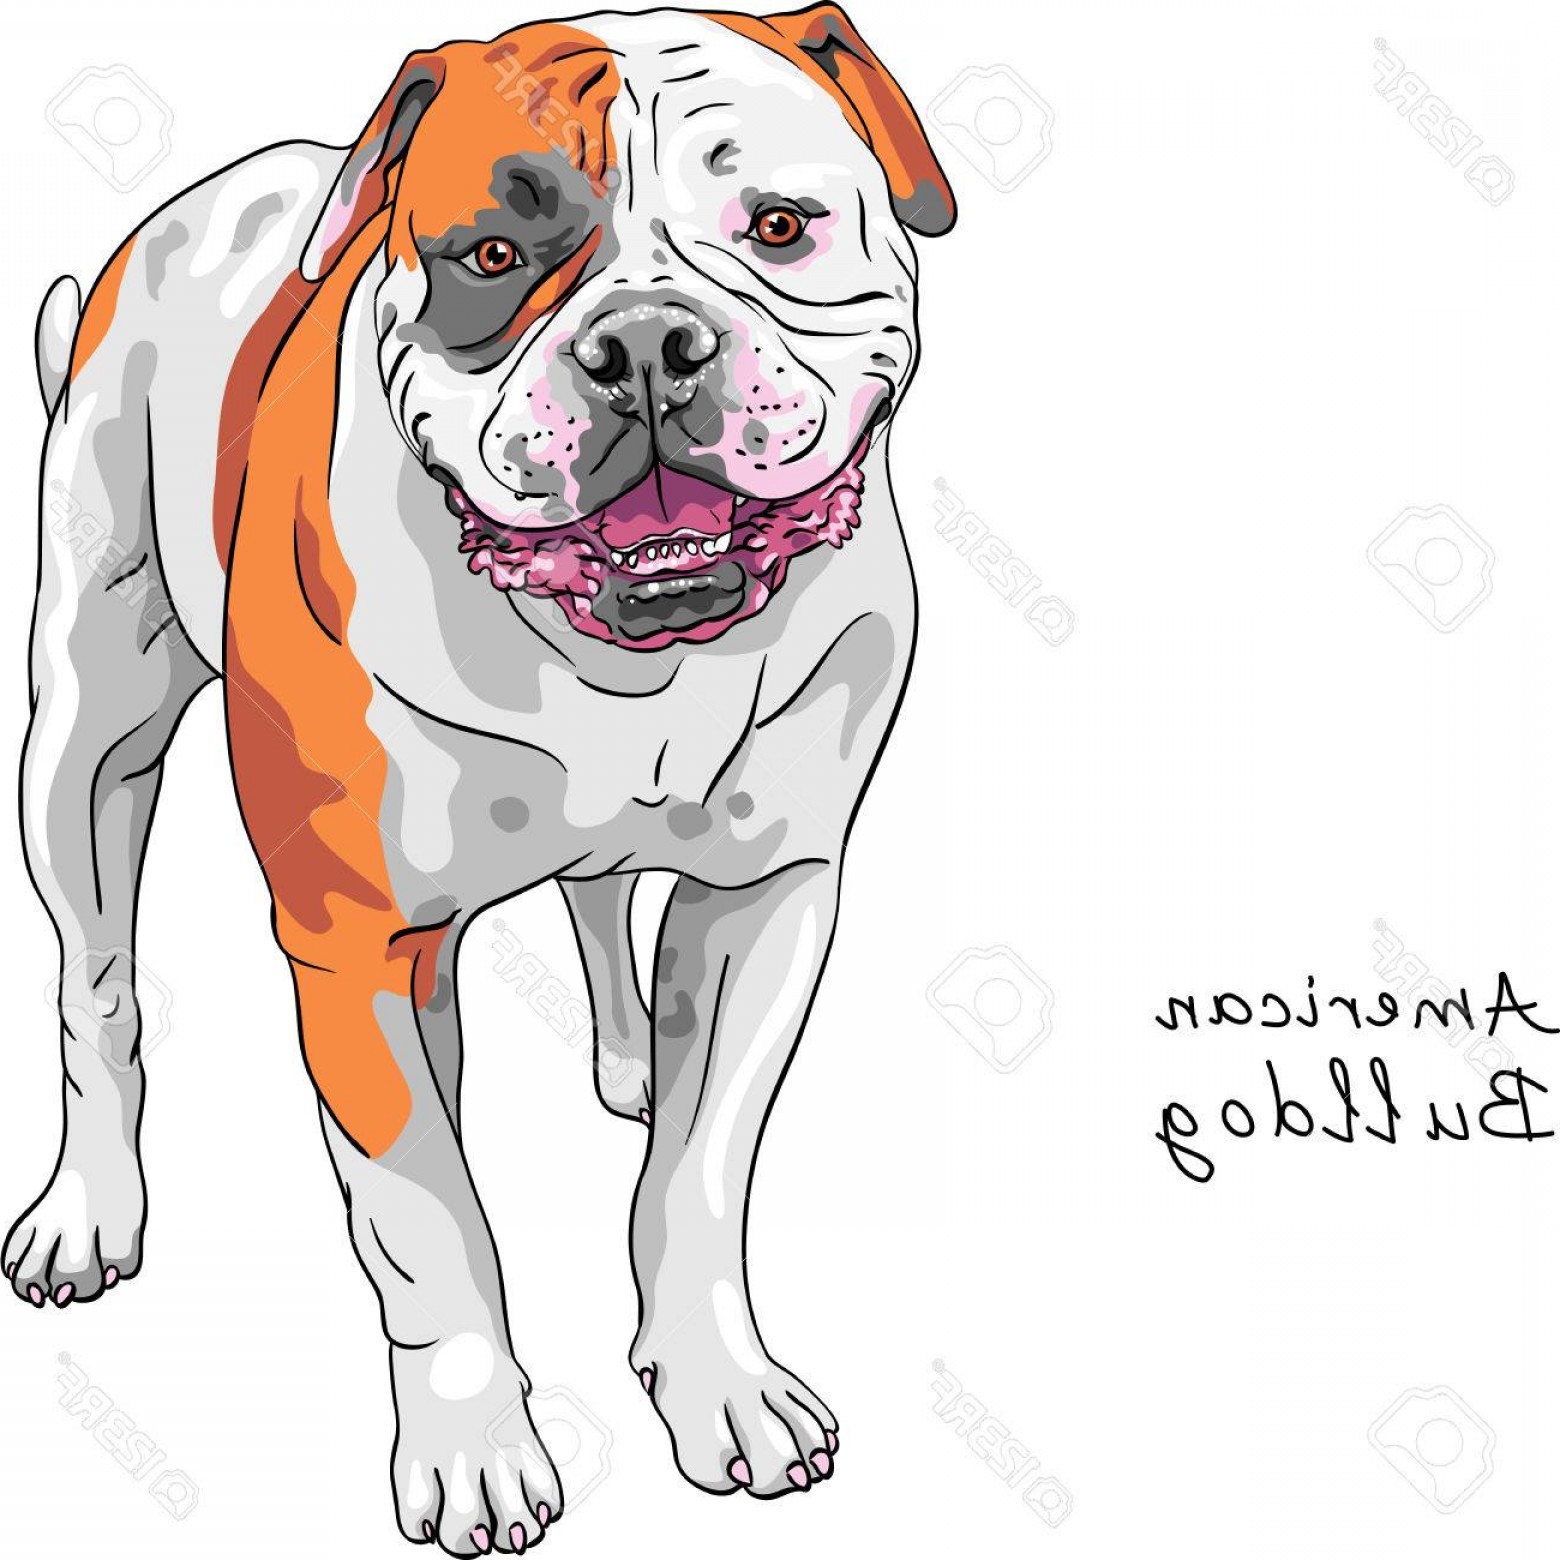 American Bulldog Sketch at Explore collection of